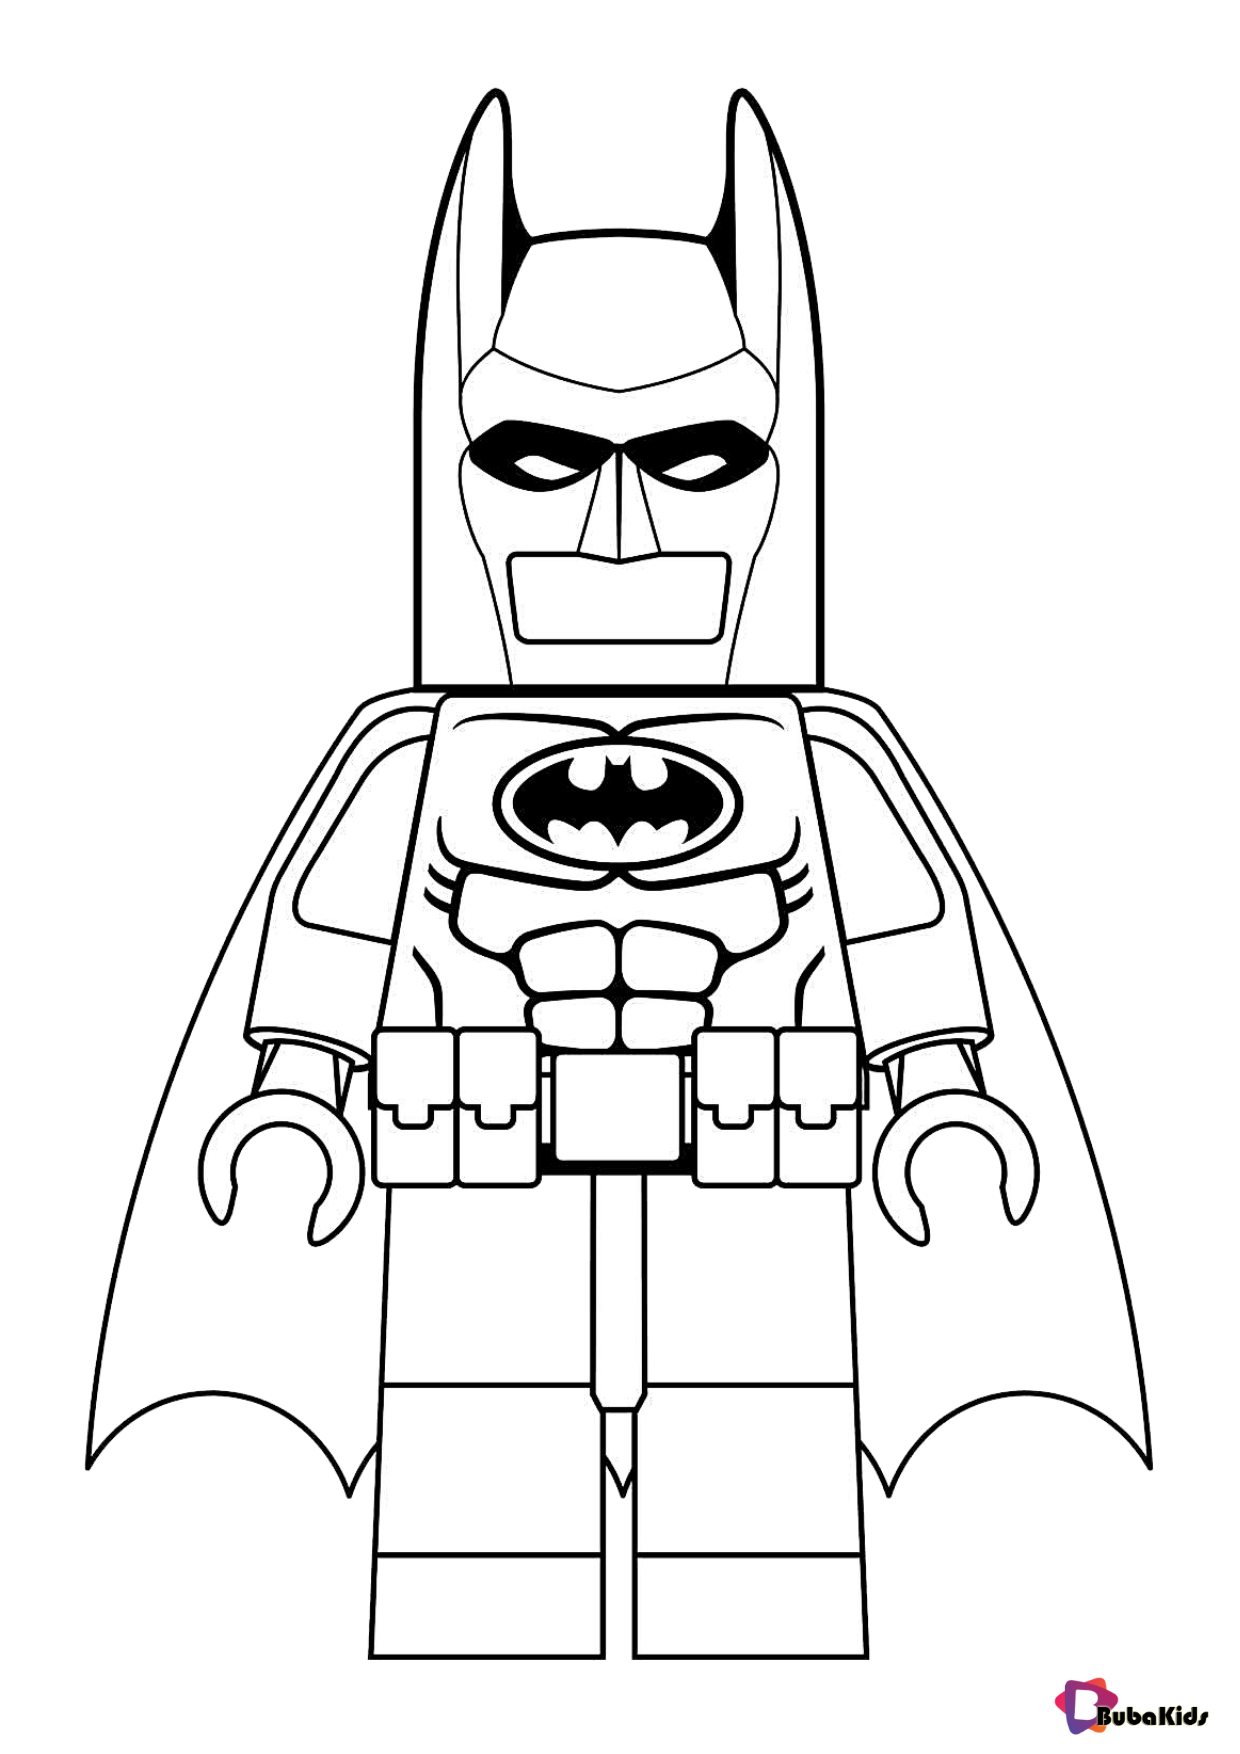 Batman lego coloring superhero colouring pages